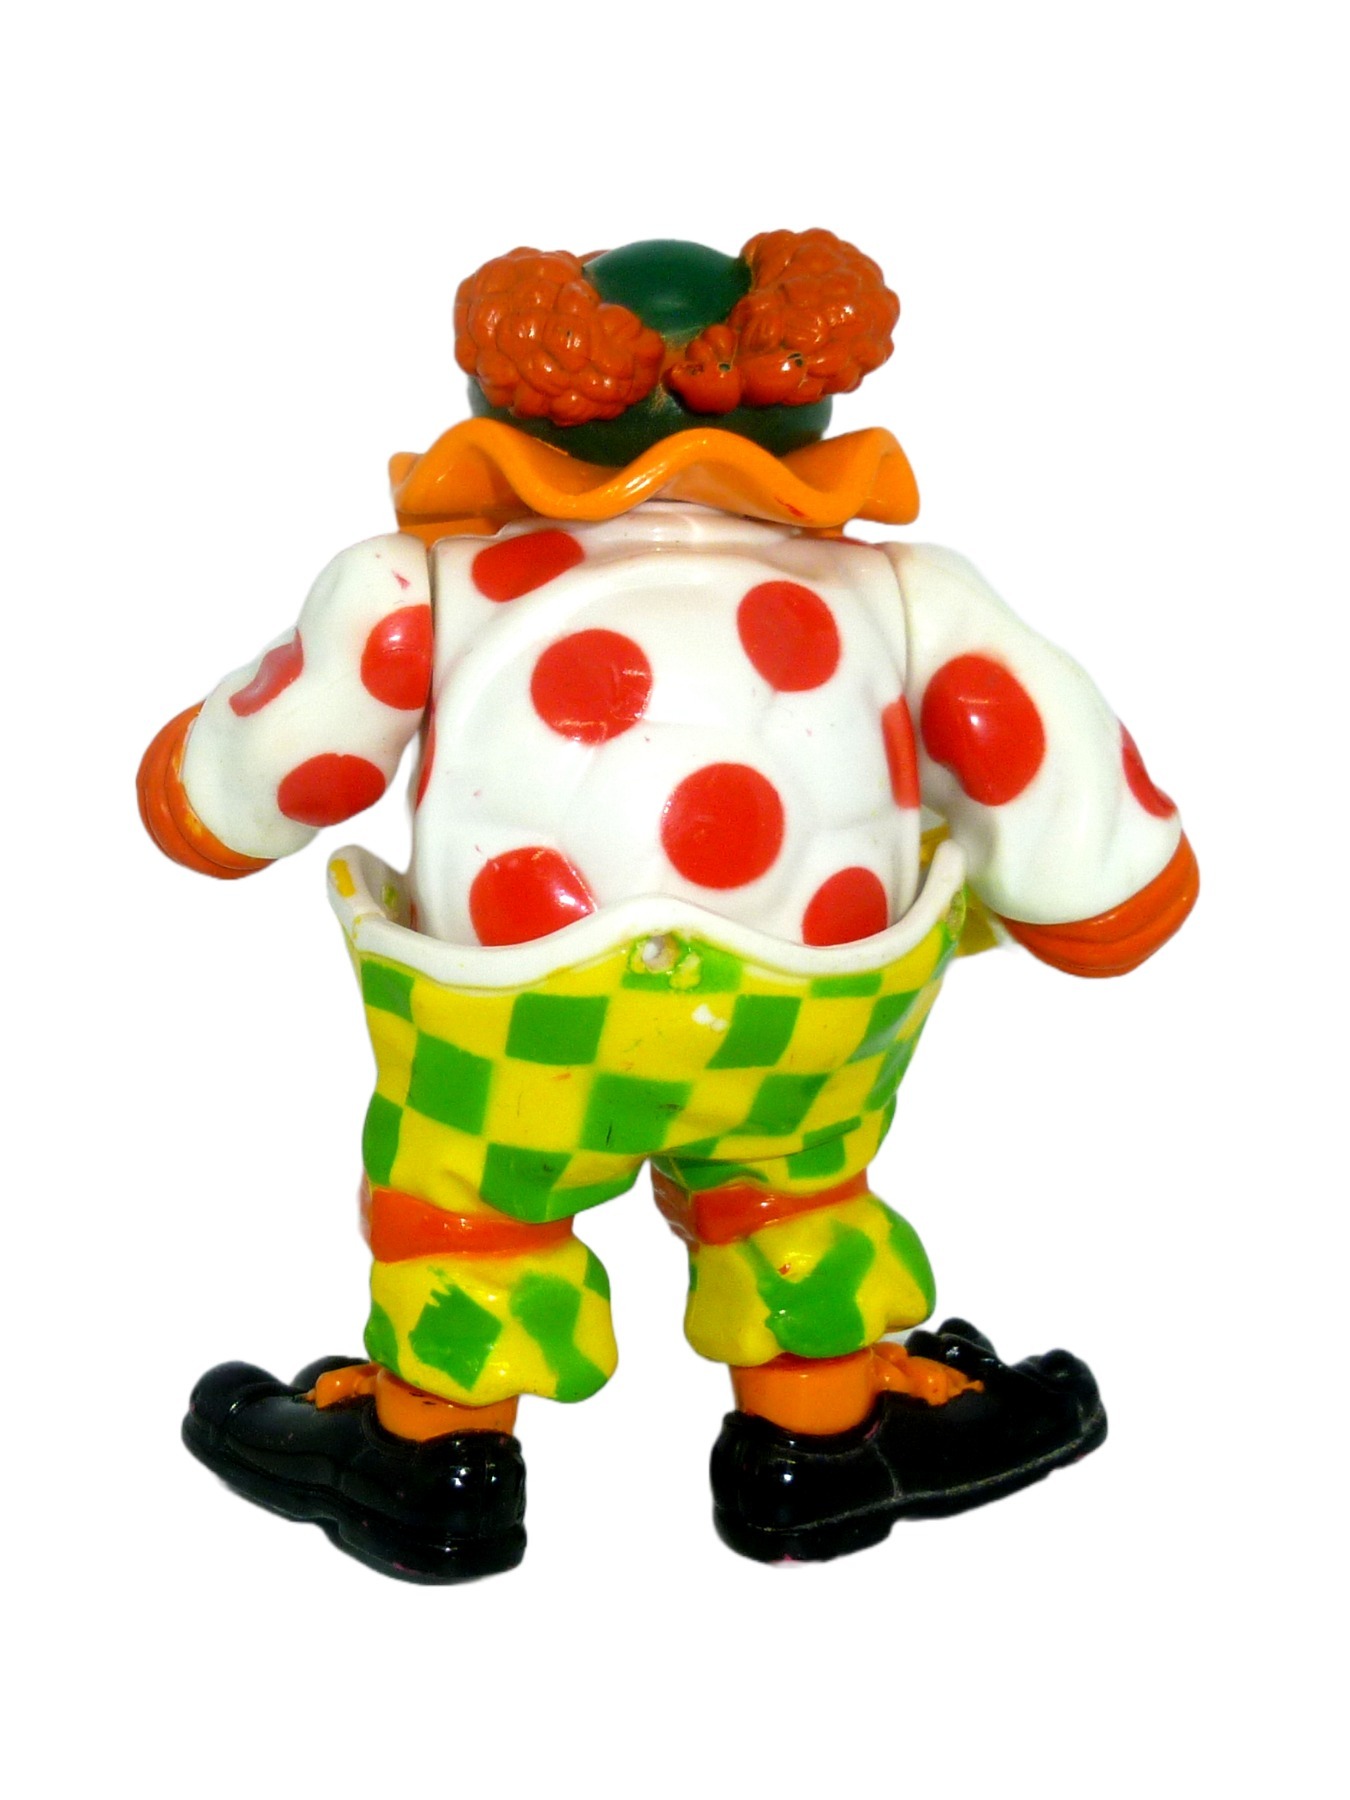 Clown Michelangelo / Michaelangelo 1992 Mirage Studios / Playmates Toys 3